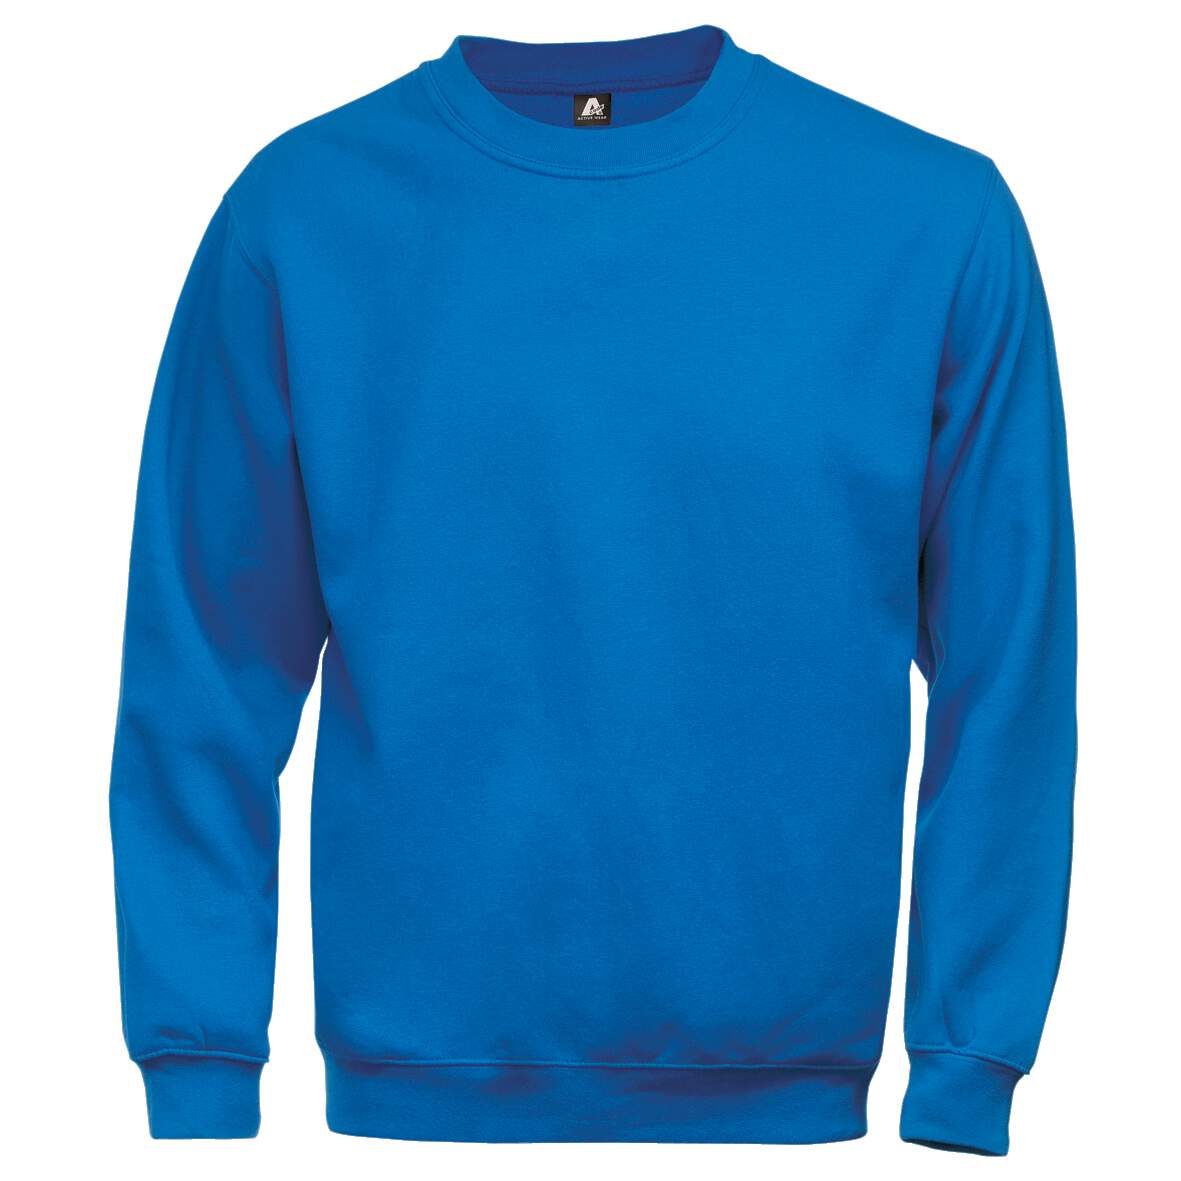 1181250 - Sweatshirt königsblau Gr.S 100225